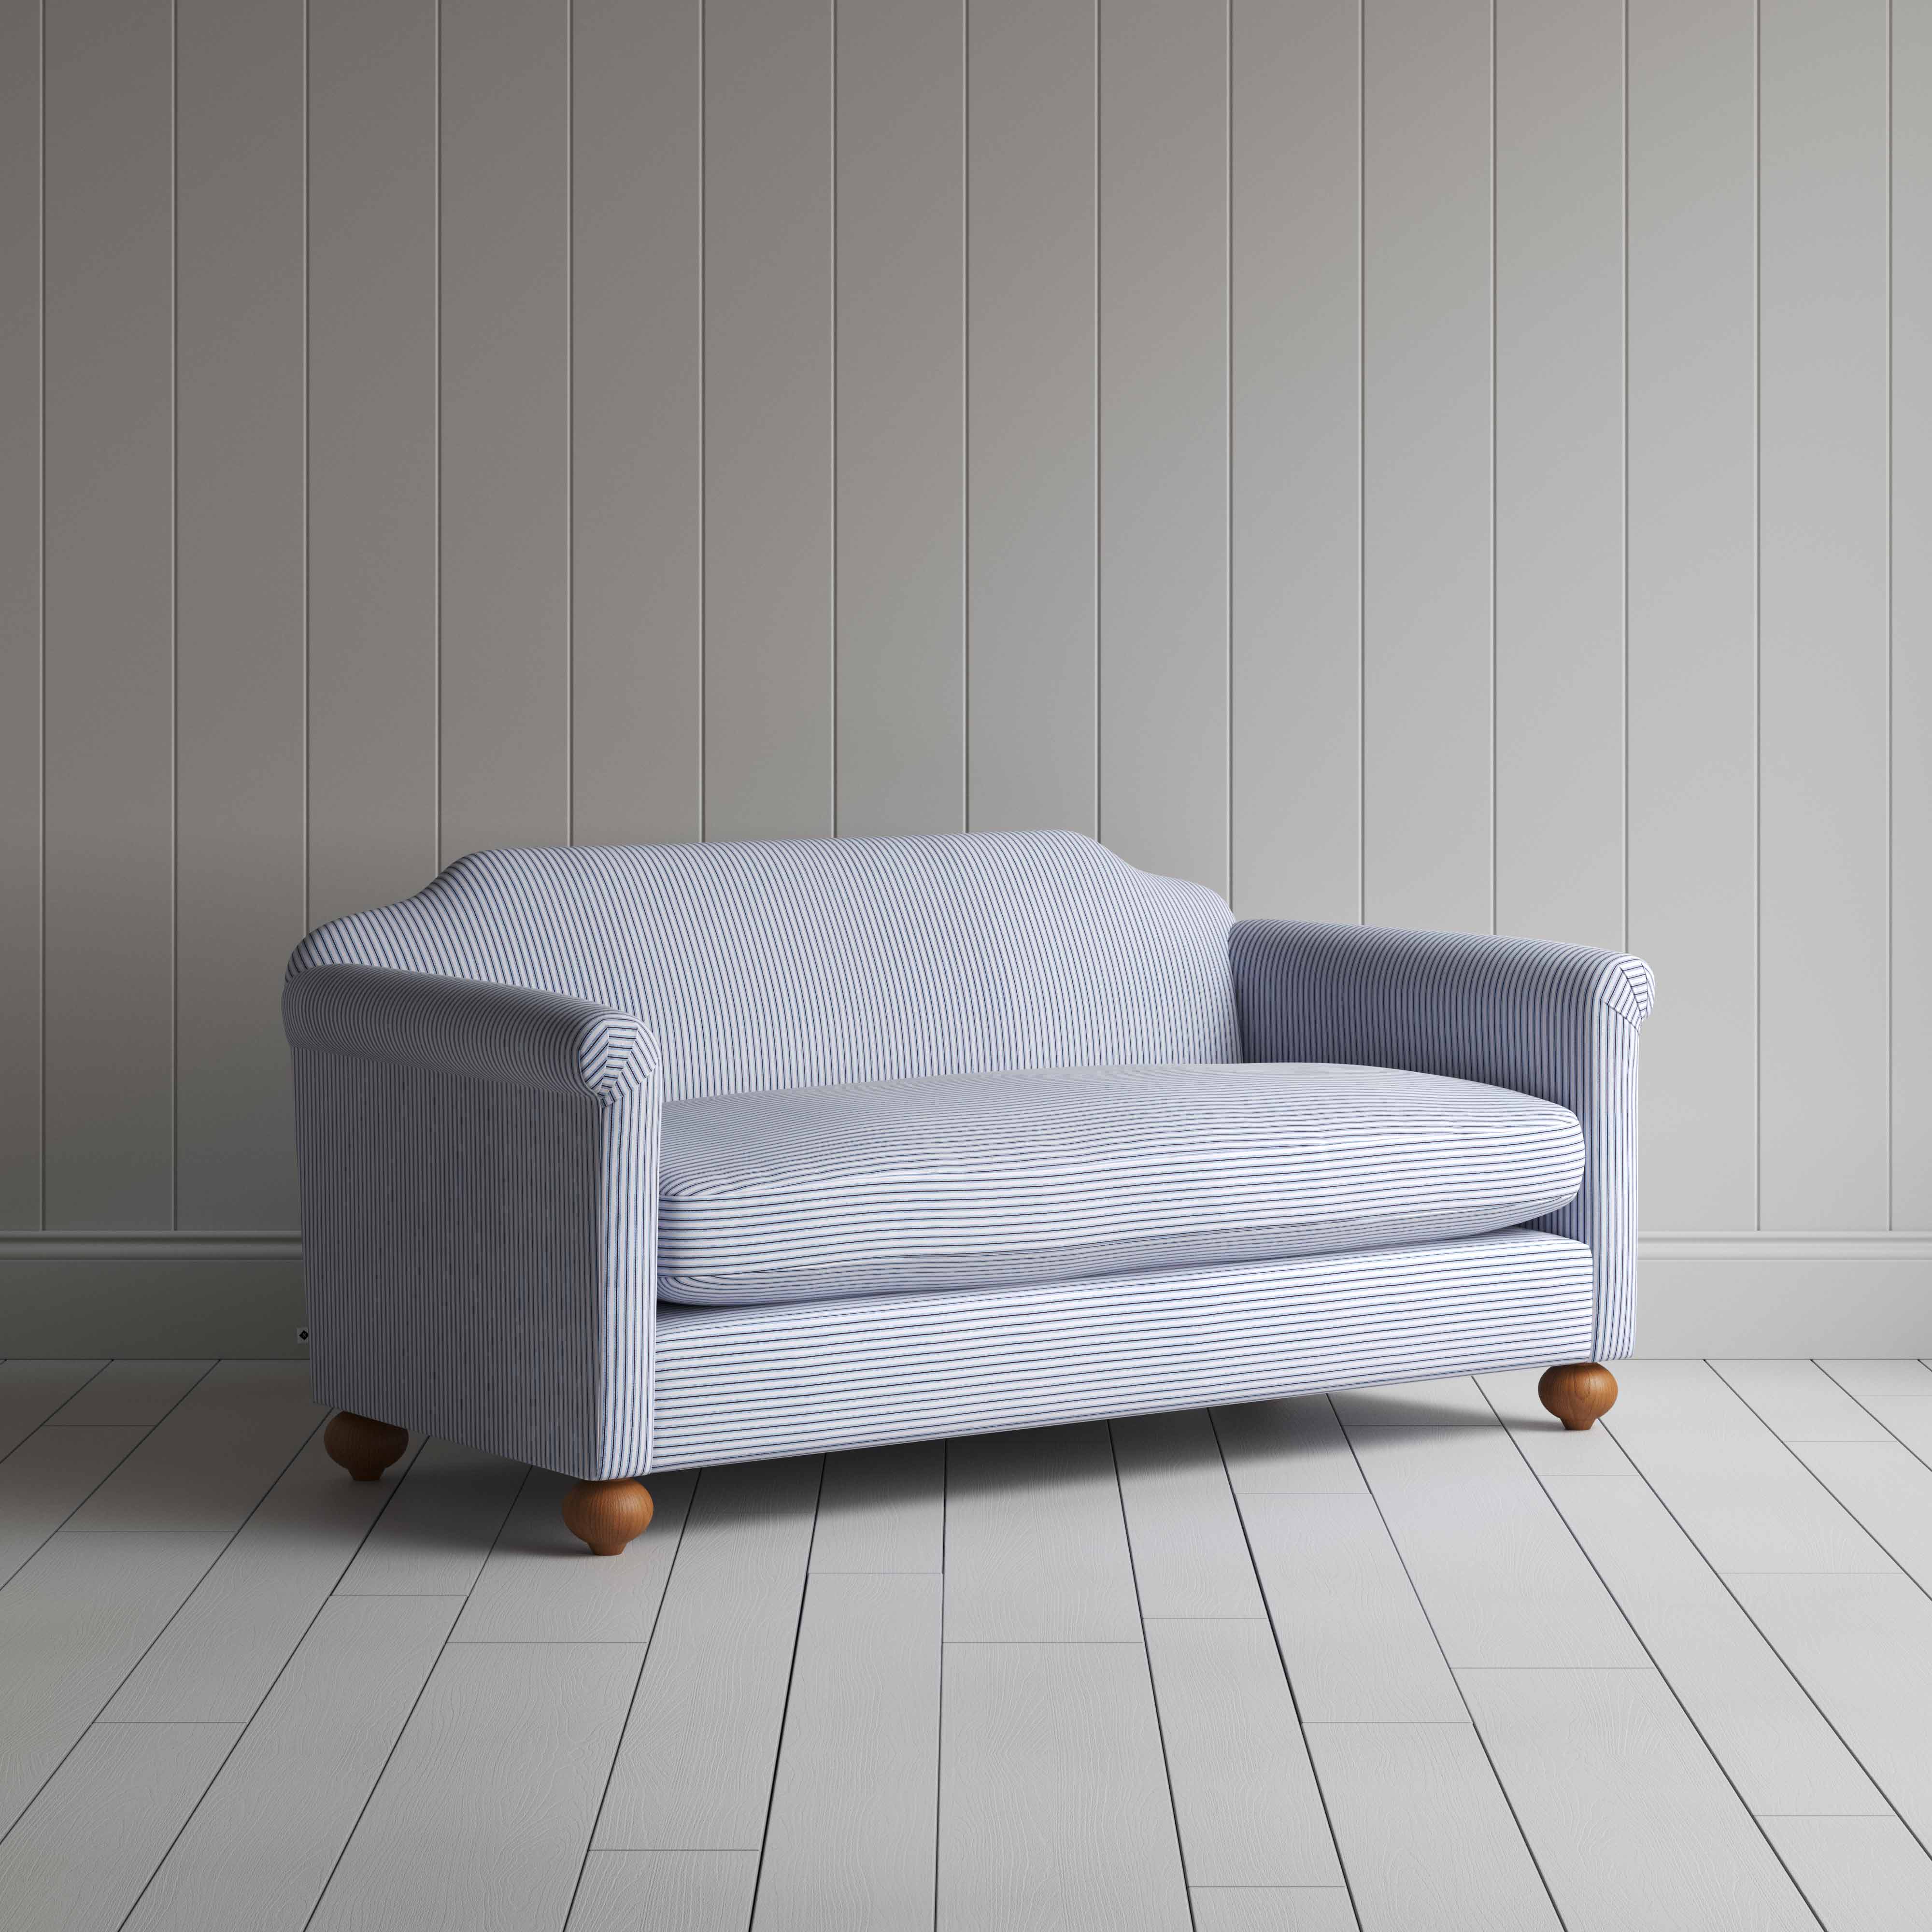  Dolittle 3 Seater Sofa in Ticking Cotton, Aqua Brown 